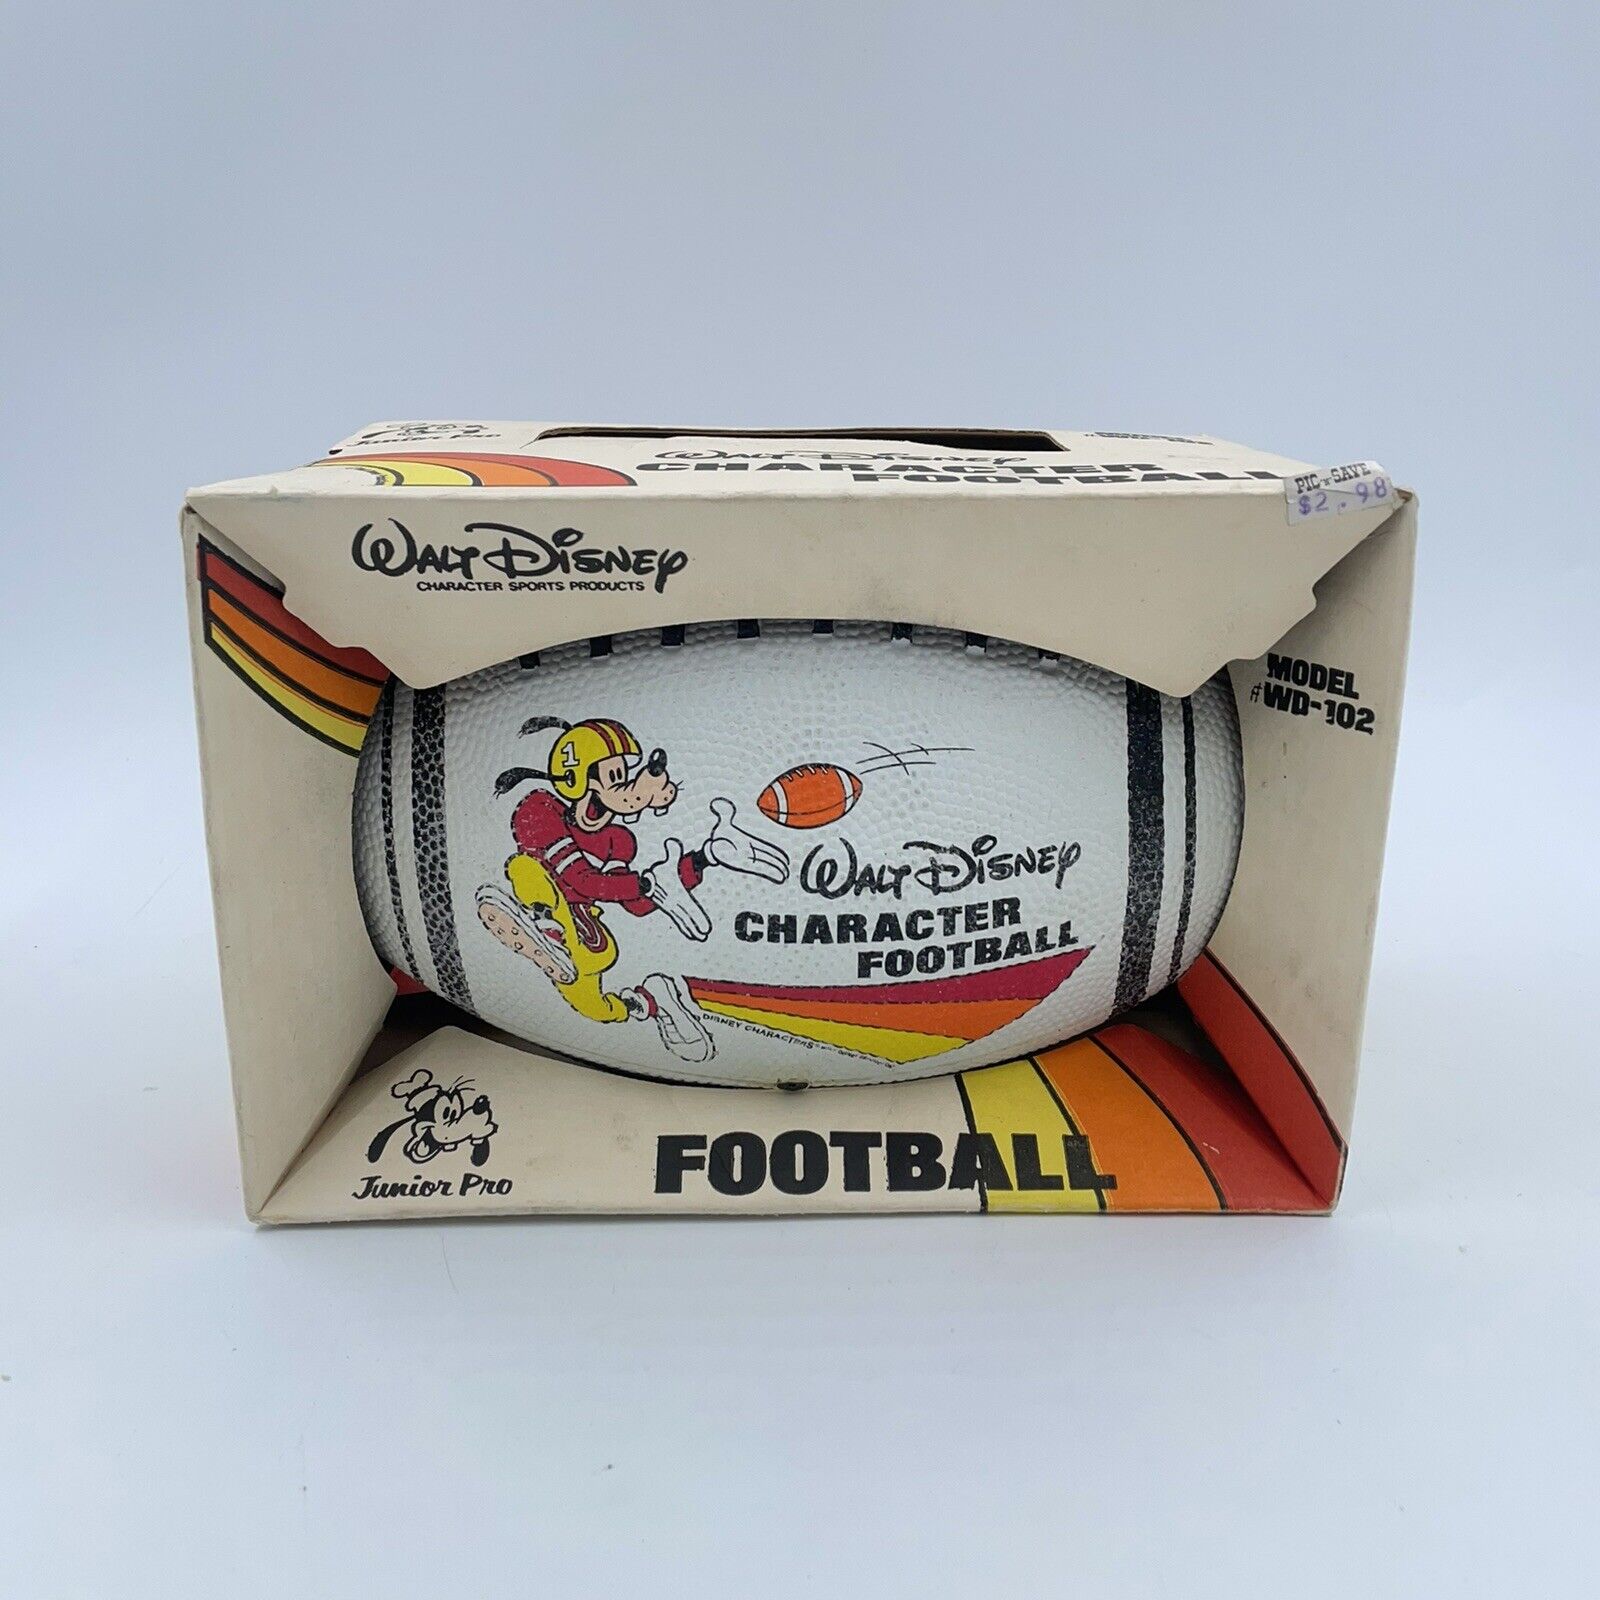 Vintage Free Former Walt Disney character football WD-102